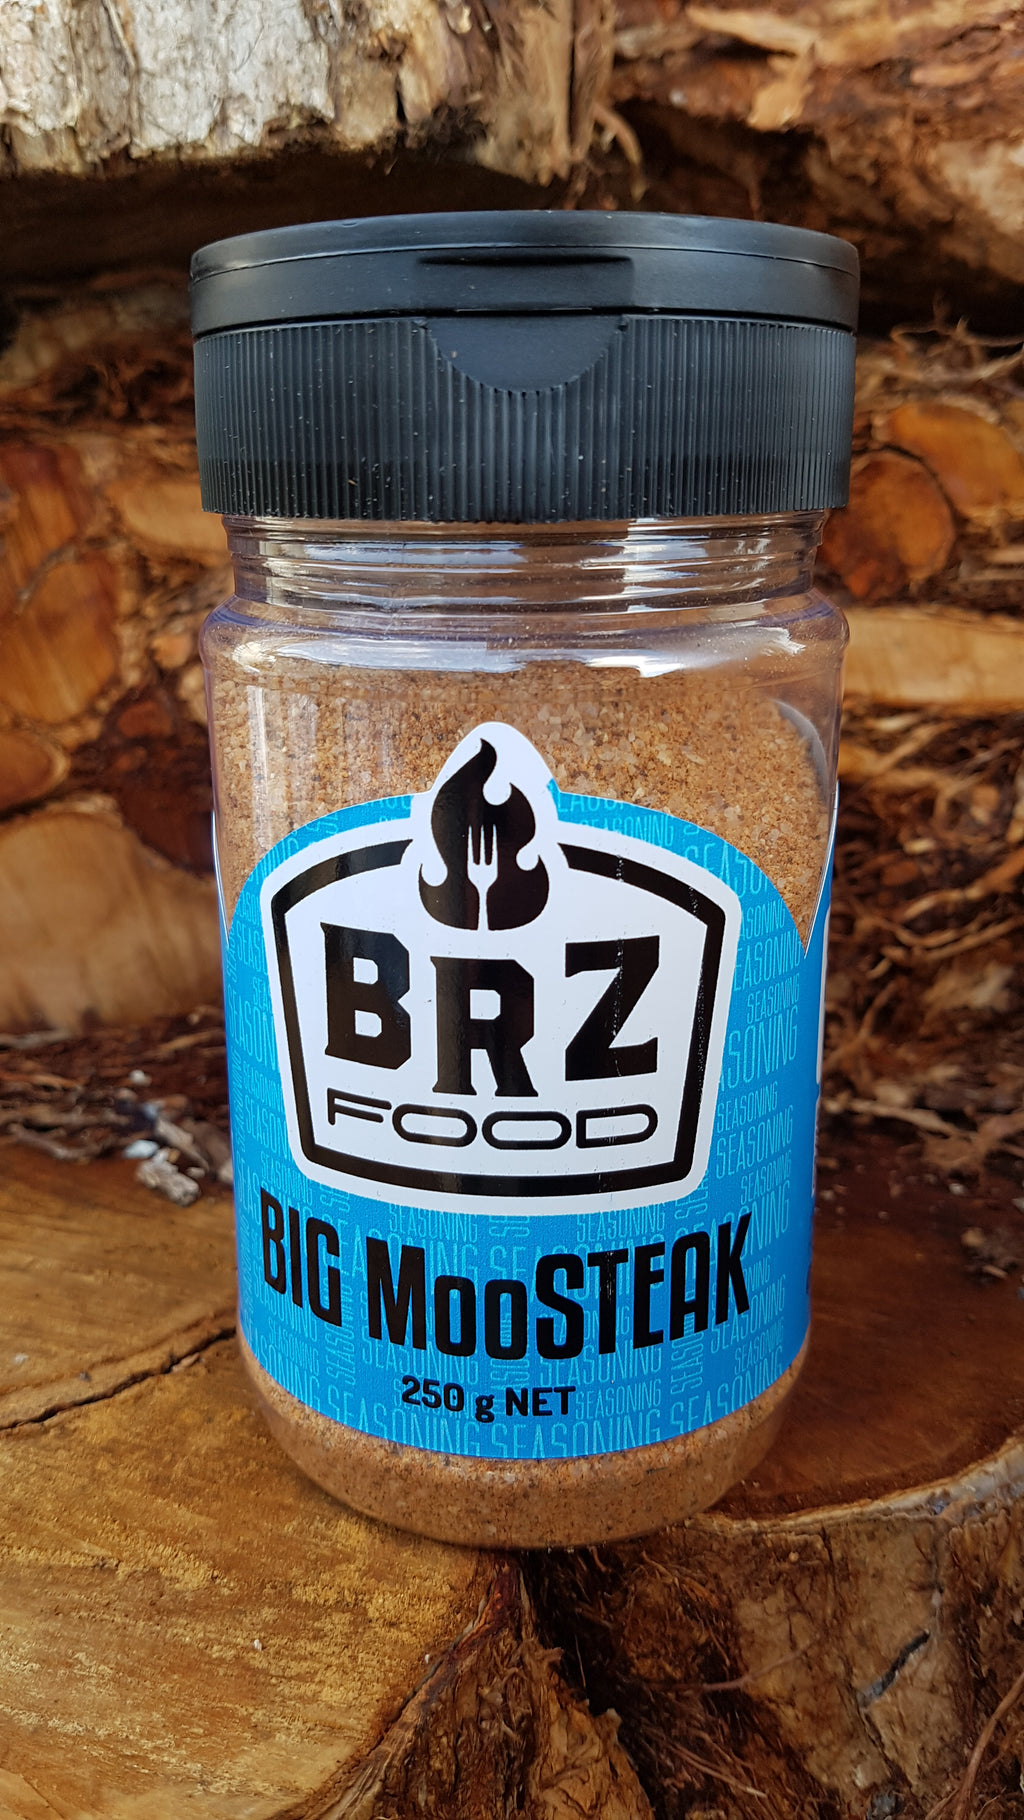 BIG MooSTEAK 250g by BRZ FOODS